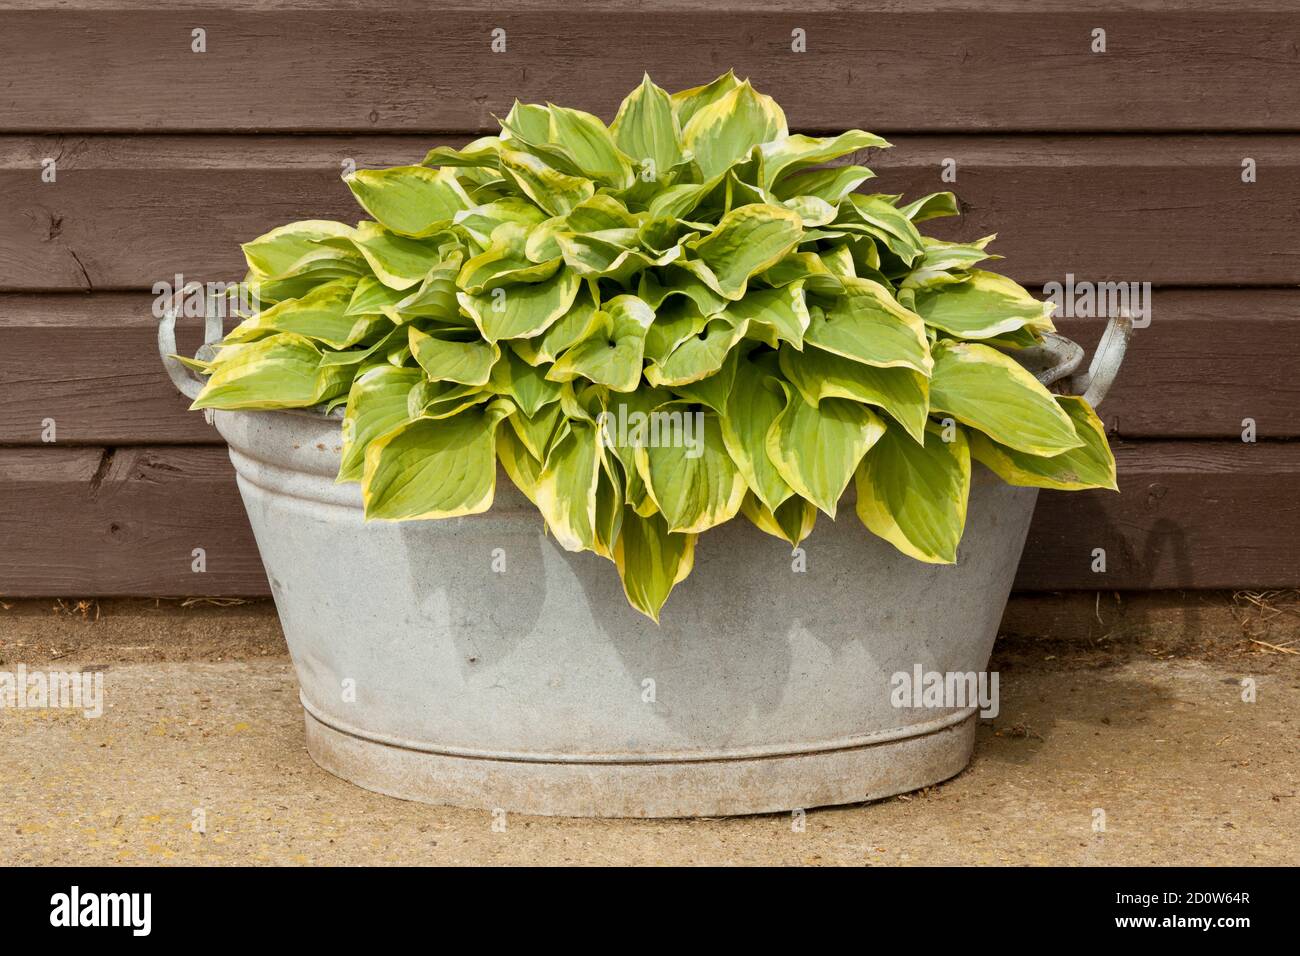 Galvanised tub of variegated leaves of a Hosta plant Stock Photo